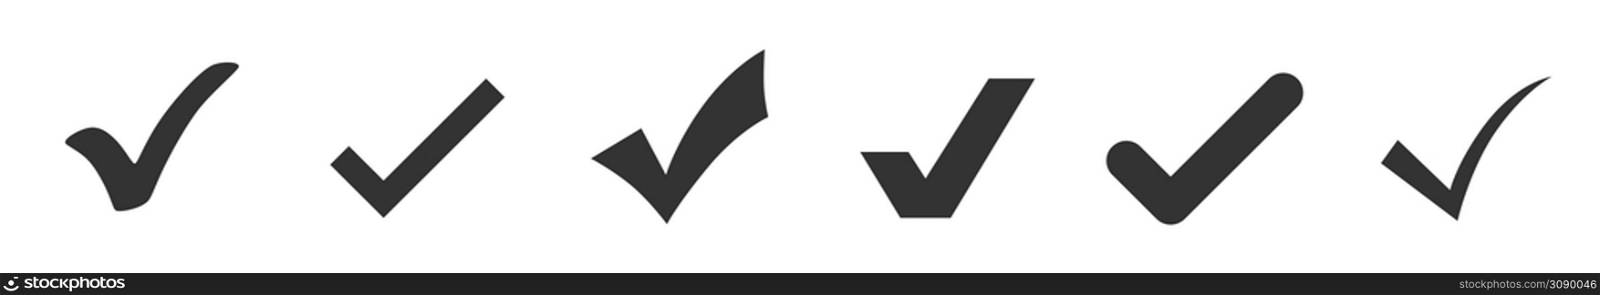 Check mark icons set isolated on white background. Vector illustration eps10. Check mark icons set isolated on white background.